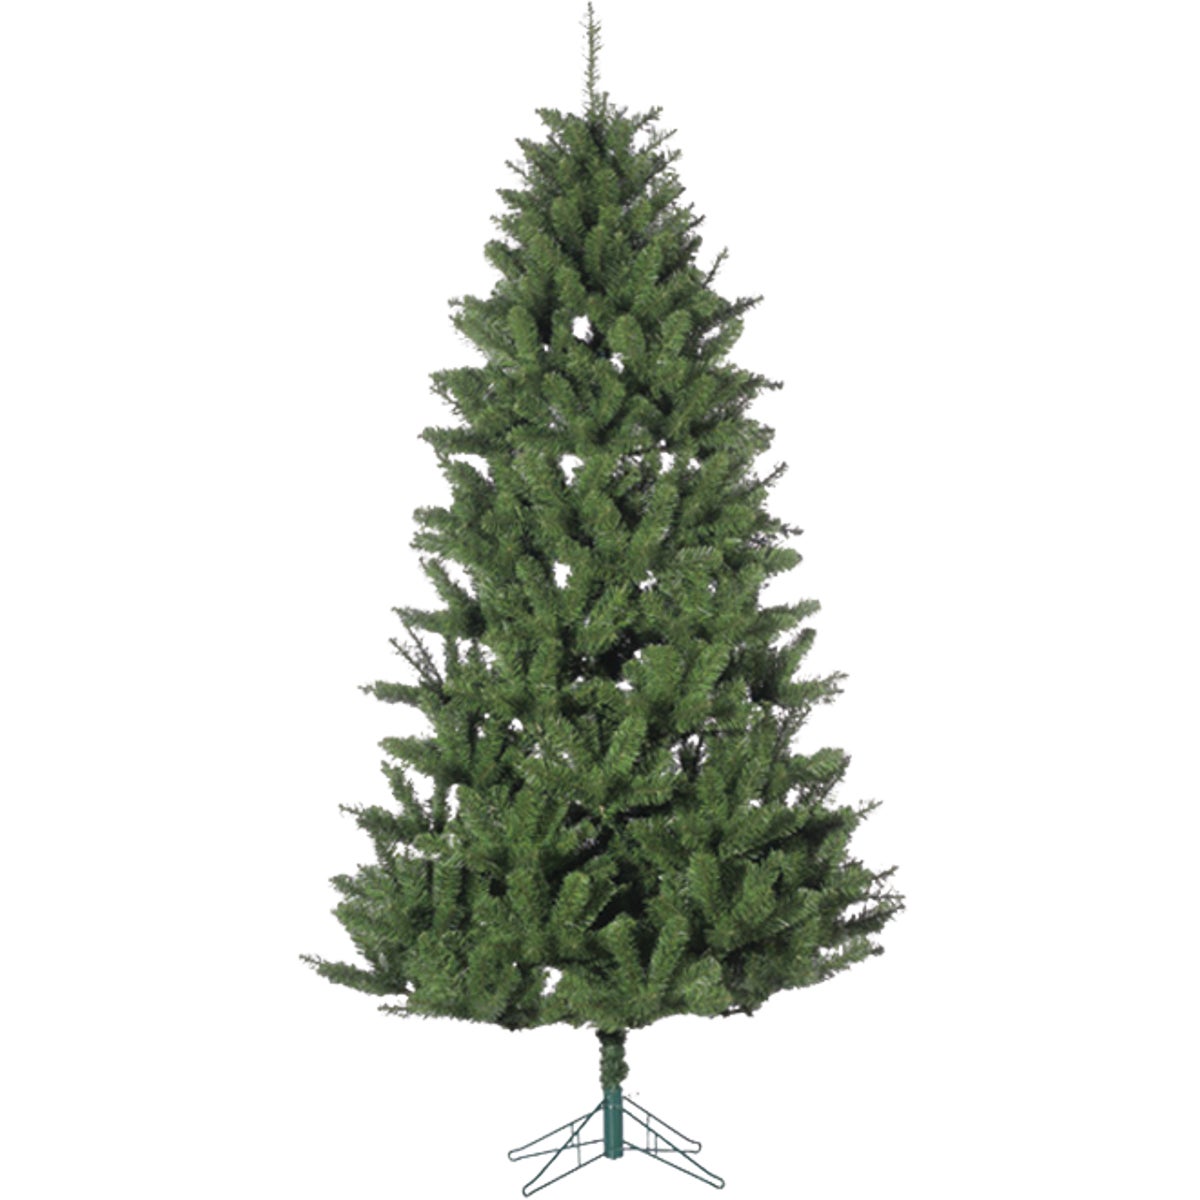 Item 900366, Unlit artificial Columbia Pine Christmas tree.